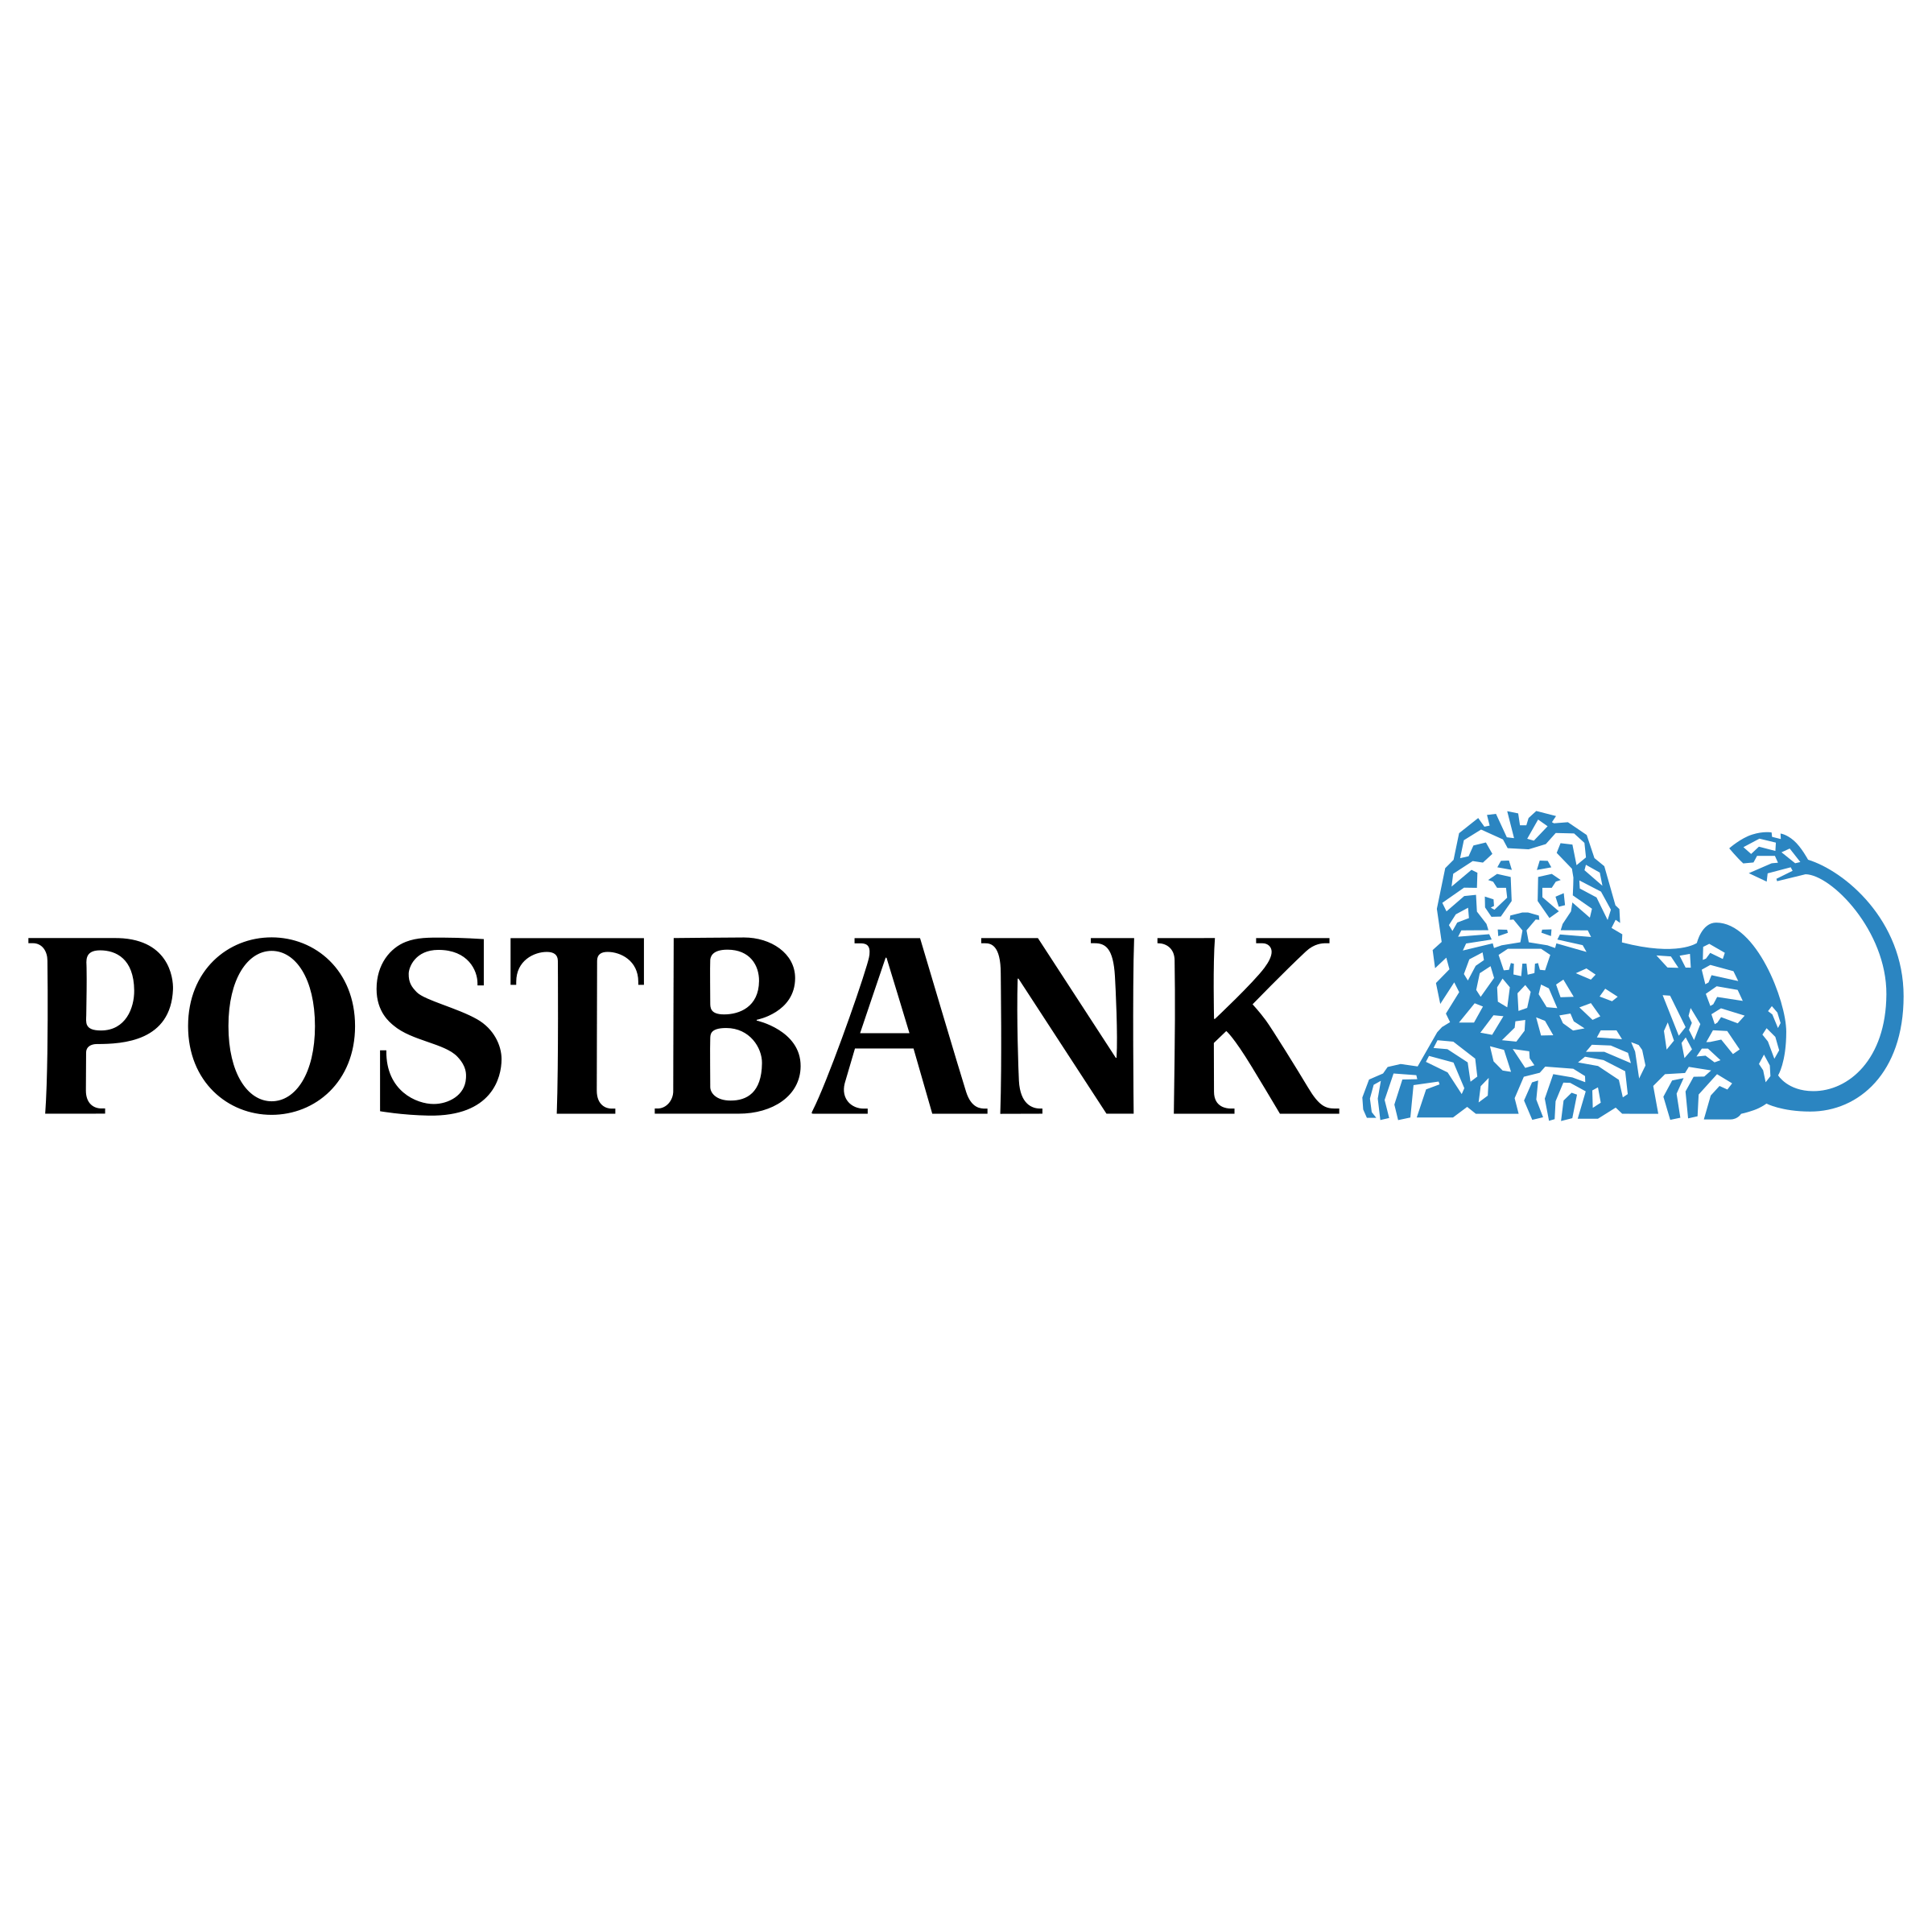 Postbank Logo - Postbank Logo PNG Transparent & SVG Vector - Freebie Supply